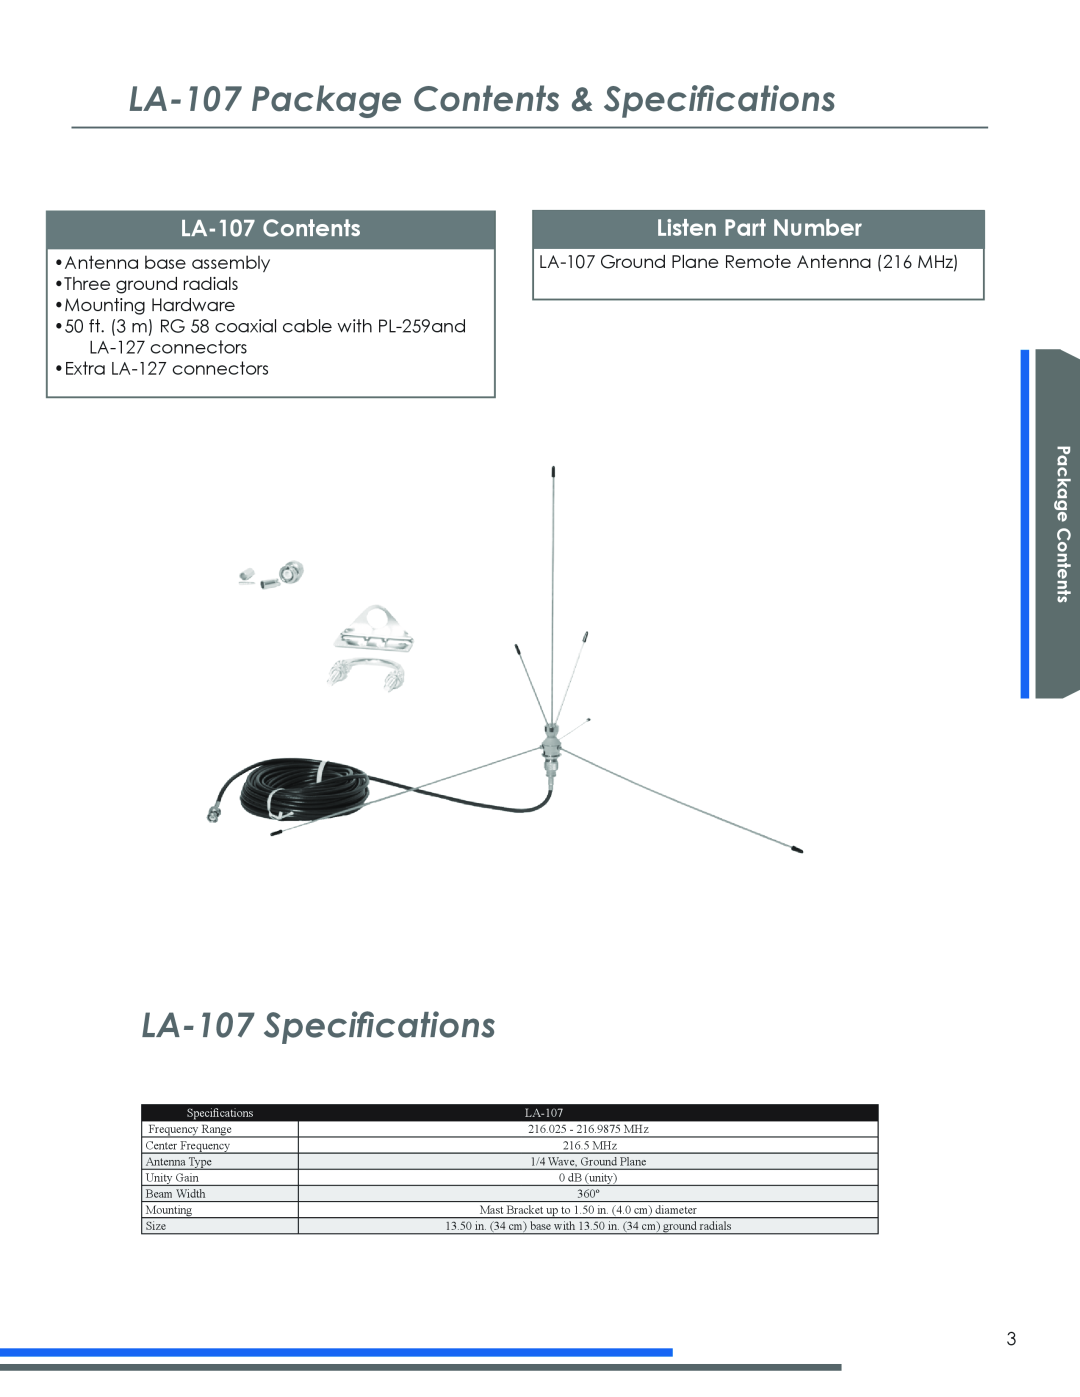 Listen Technologies LA-107Package Contents & Specifications, LA-107Specifications, LA-107Contents, Listen Part Number 